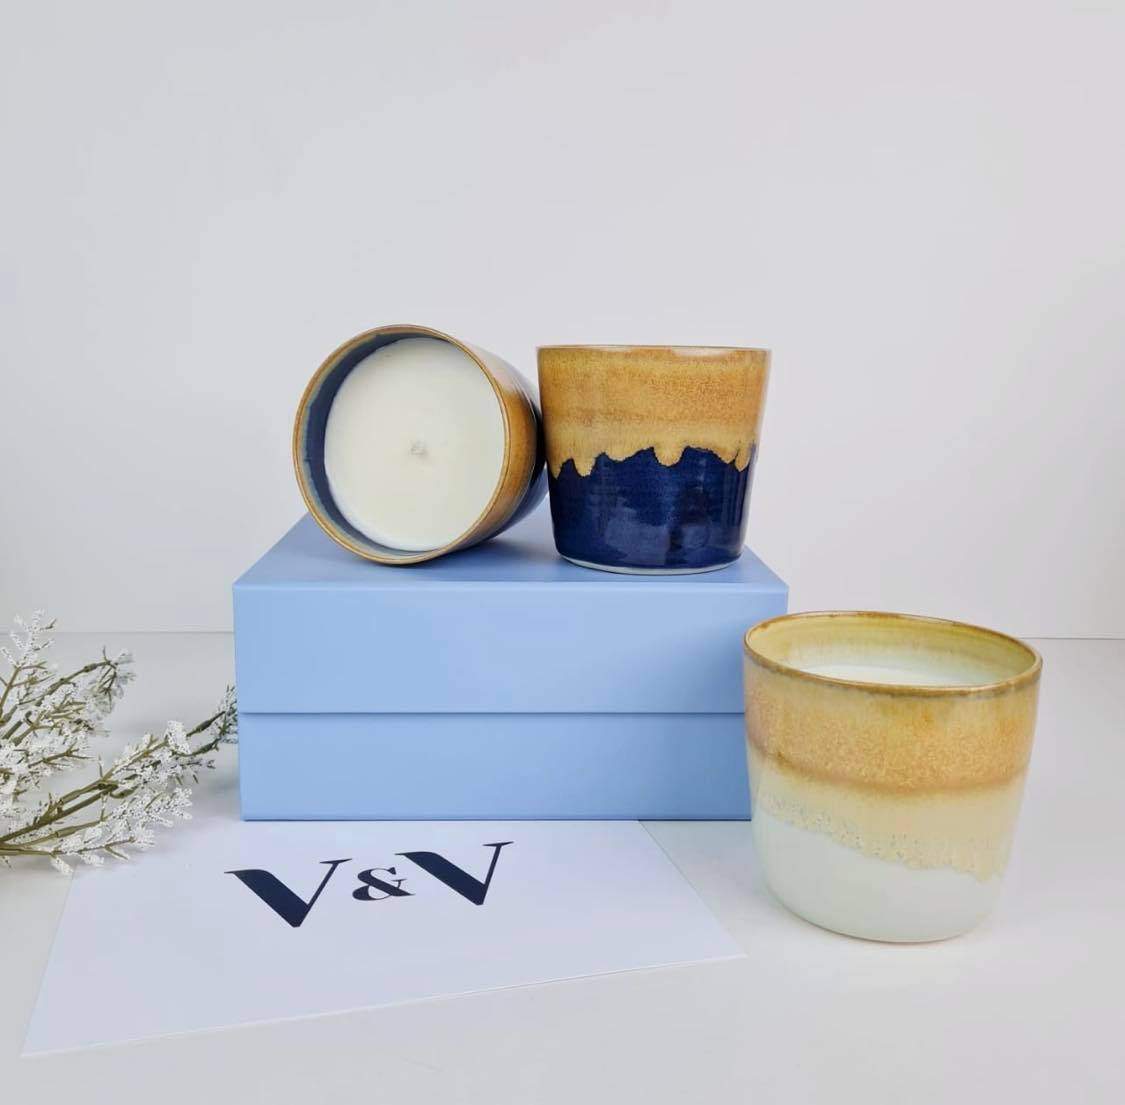 V&V Candle & Refill Gift set